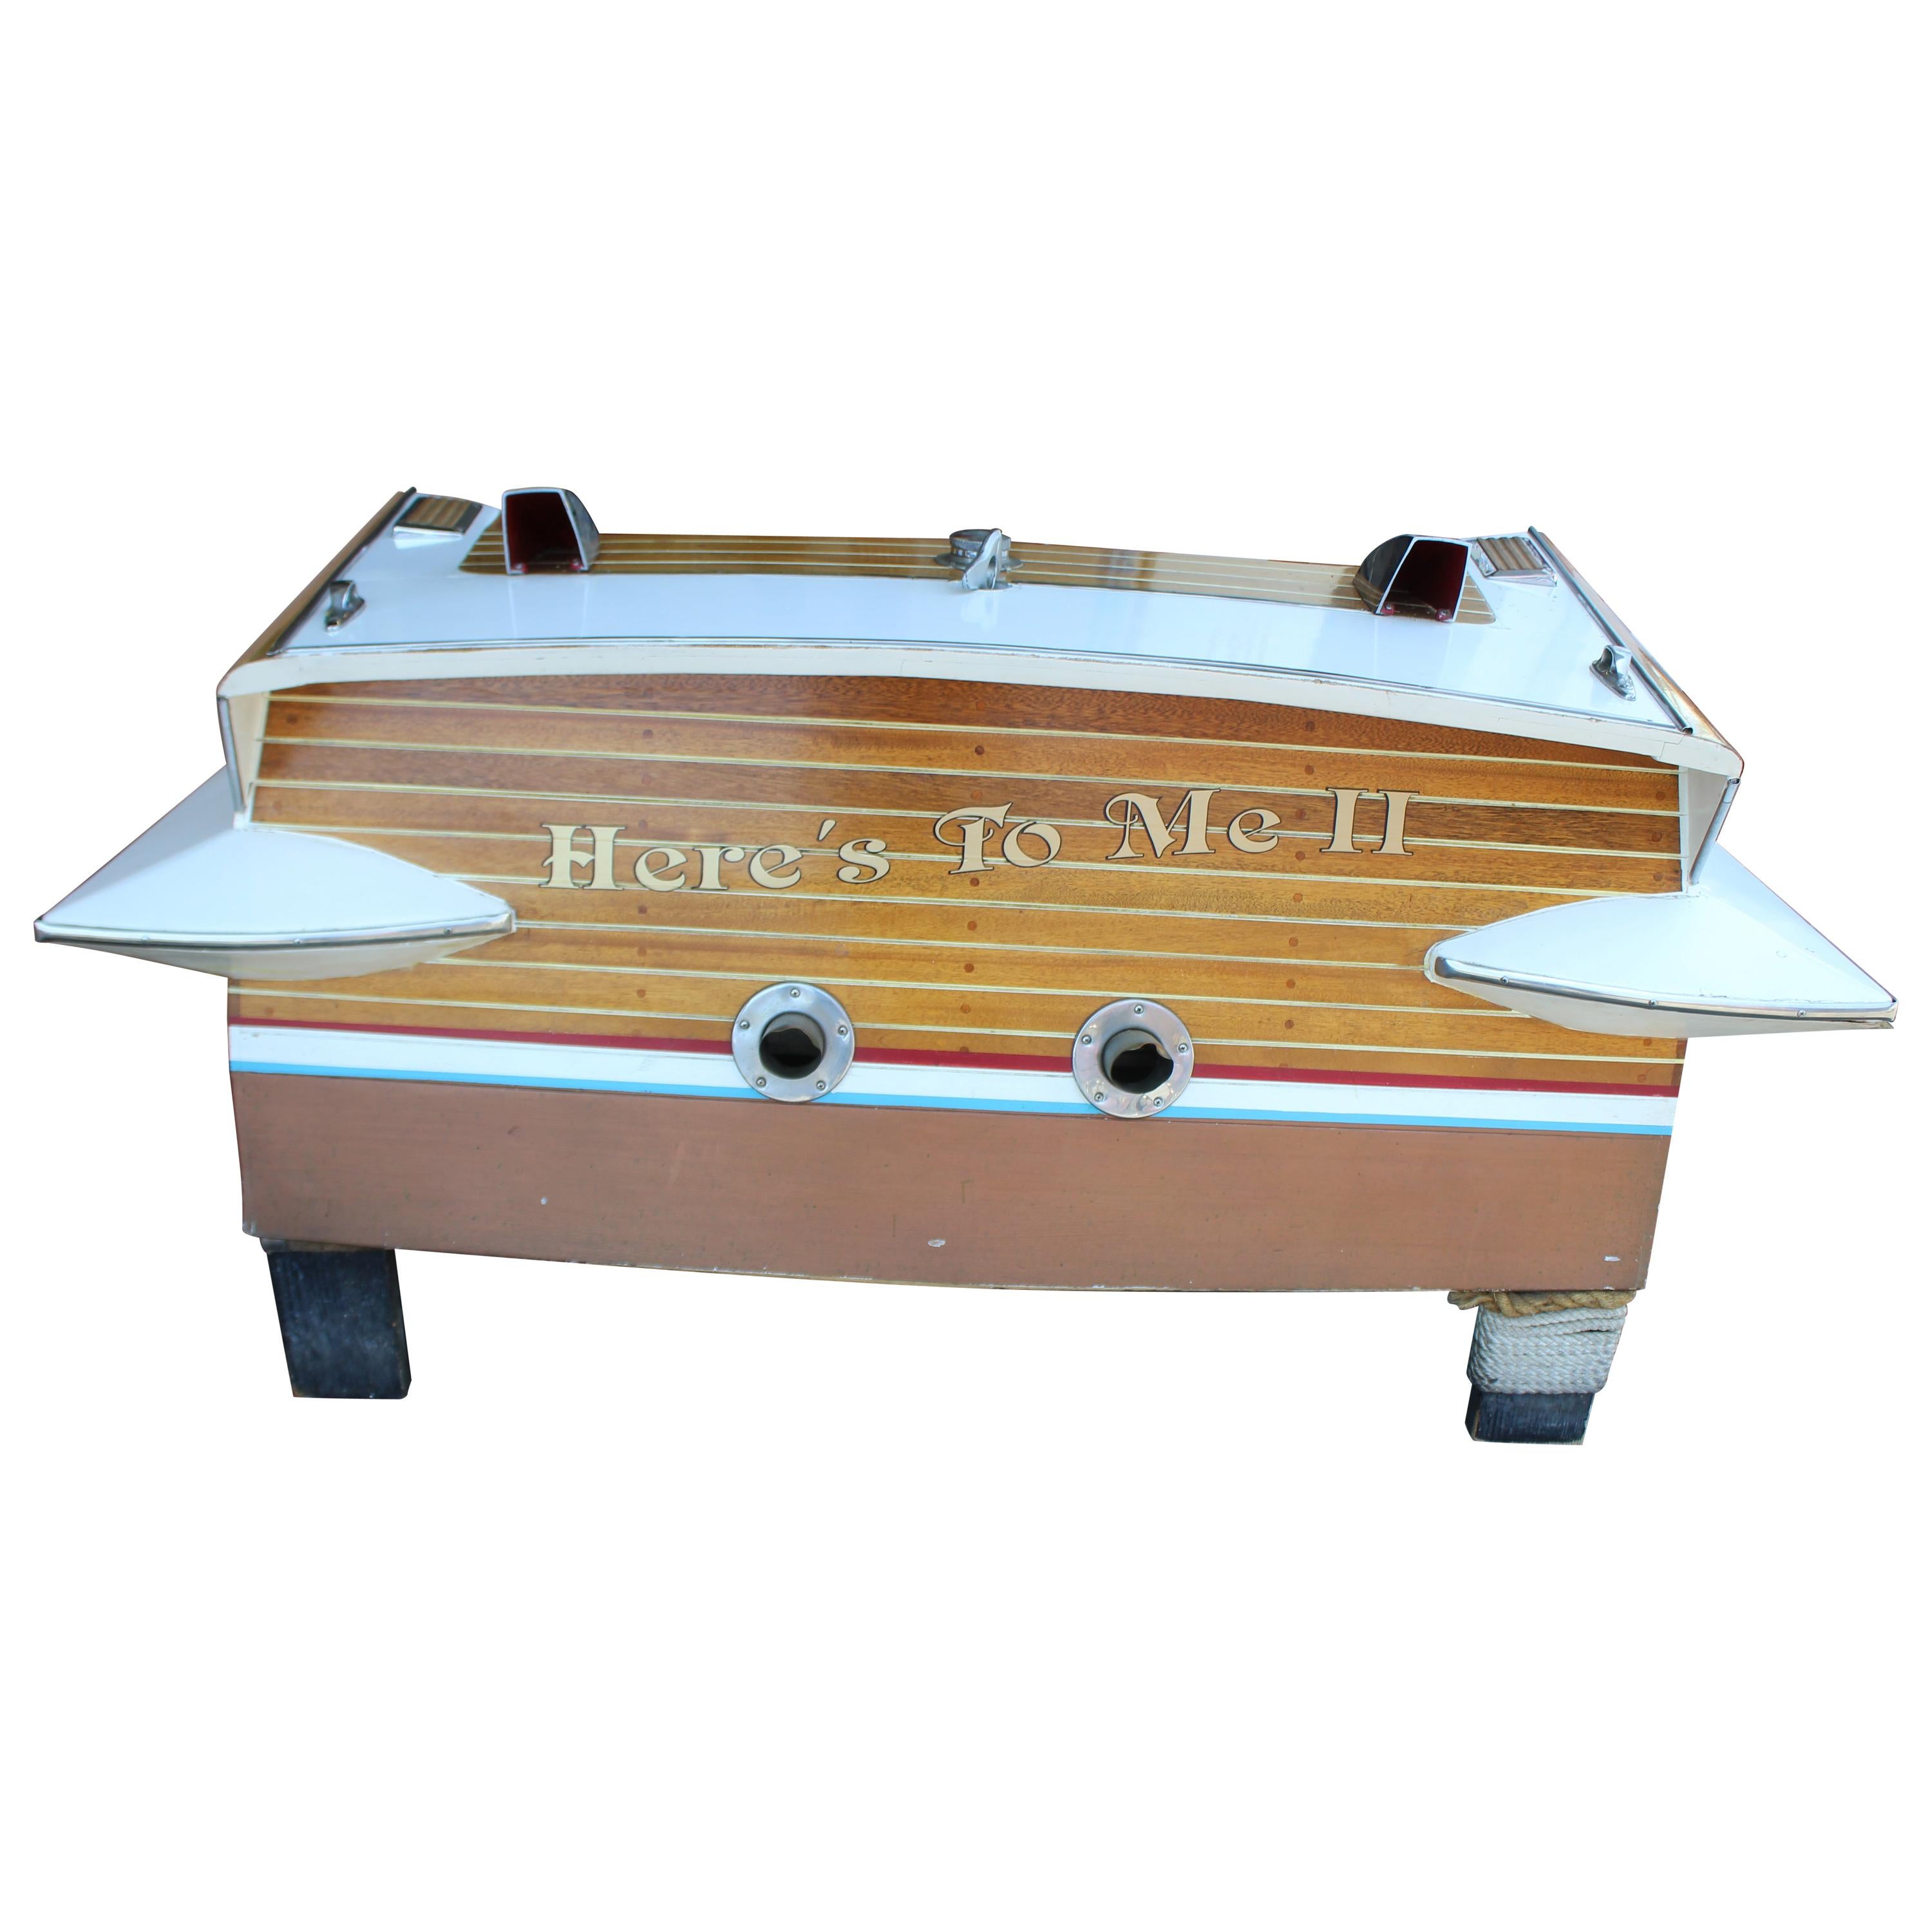 1950s Chris Craft Cavalier Cut Stern Rear Boat For Sale